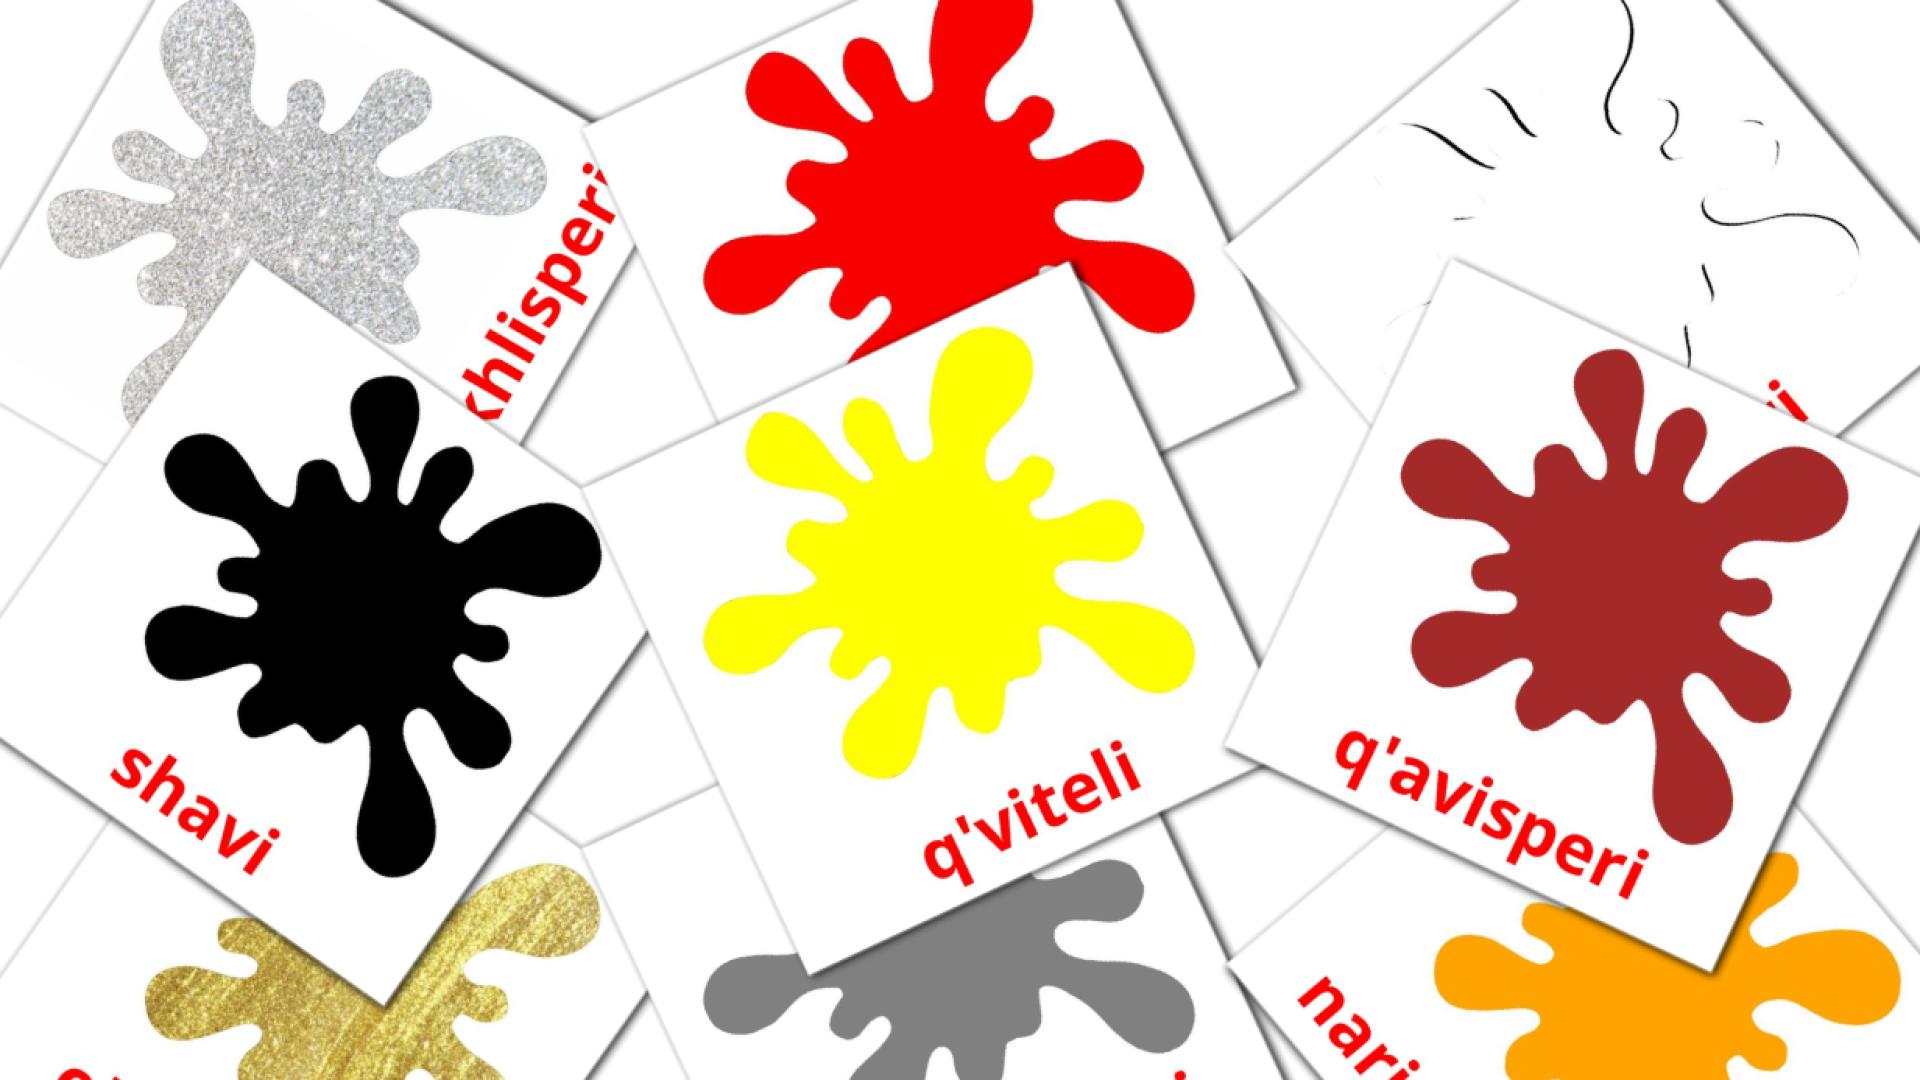 Perebi tigrigna(Eritrea) vocabulary flashcards